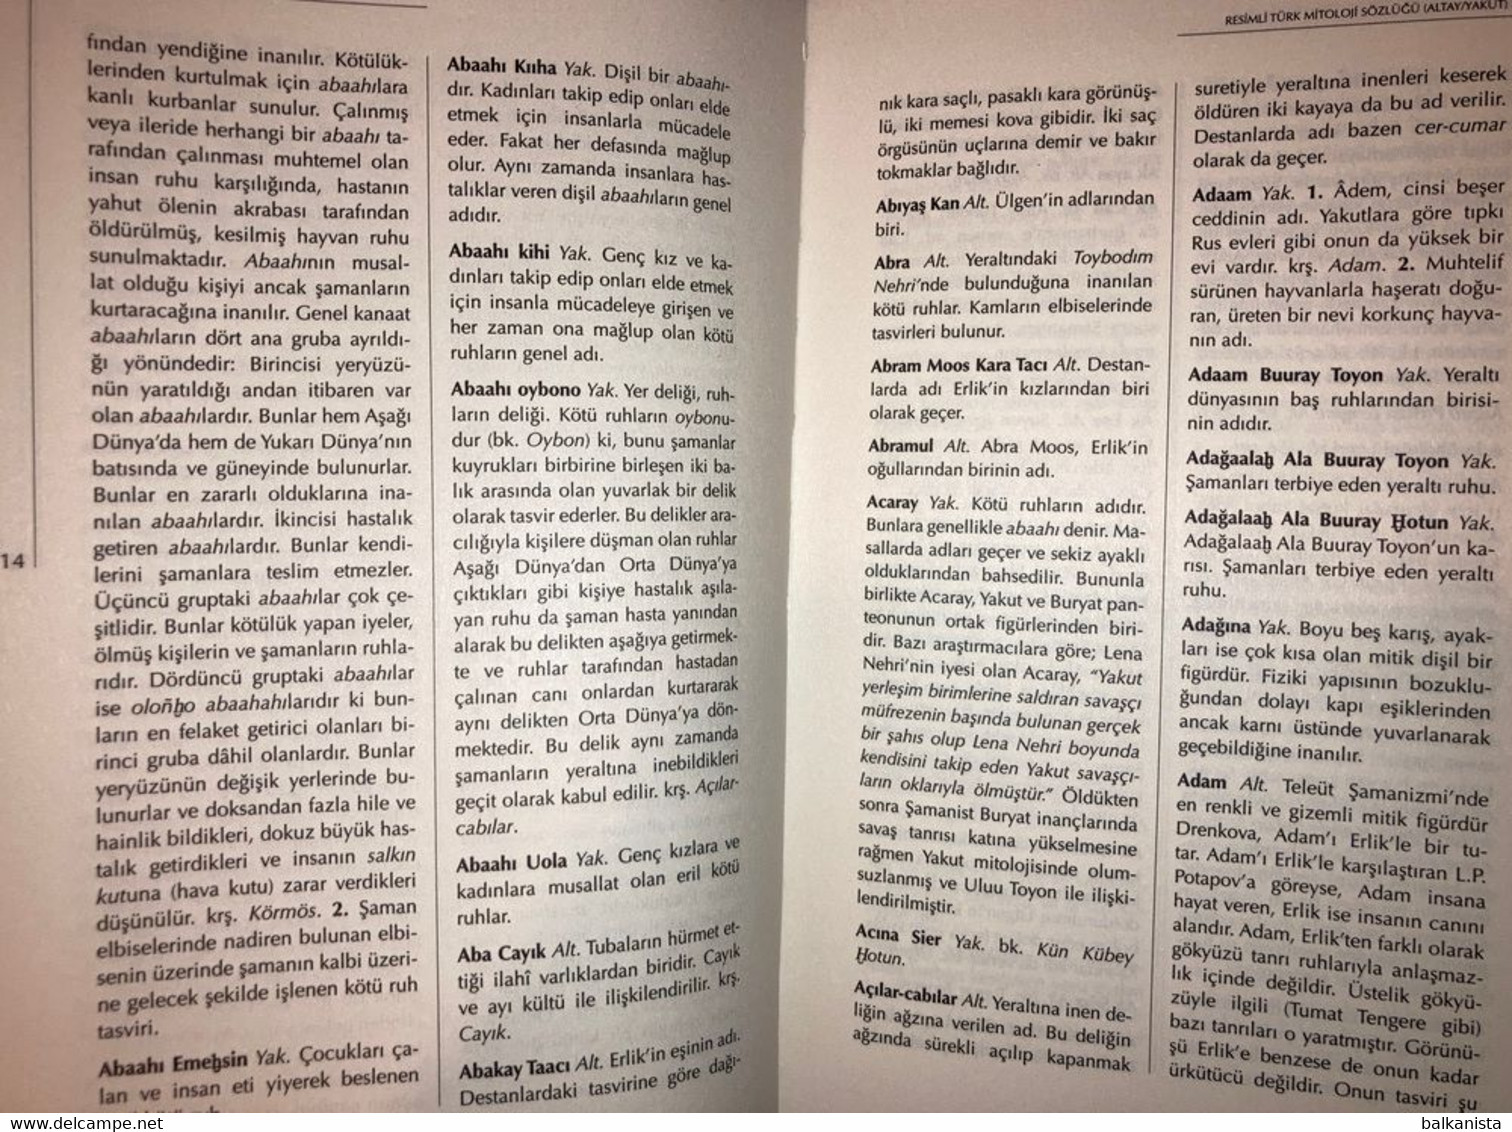 Turk Mitoloji Sozlugu - Turkish Turkic Mythology  Dictionary - Woordenboeken